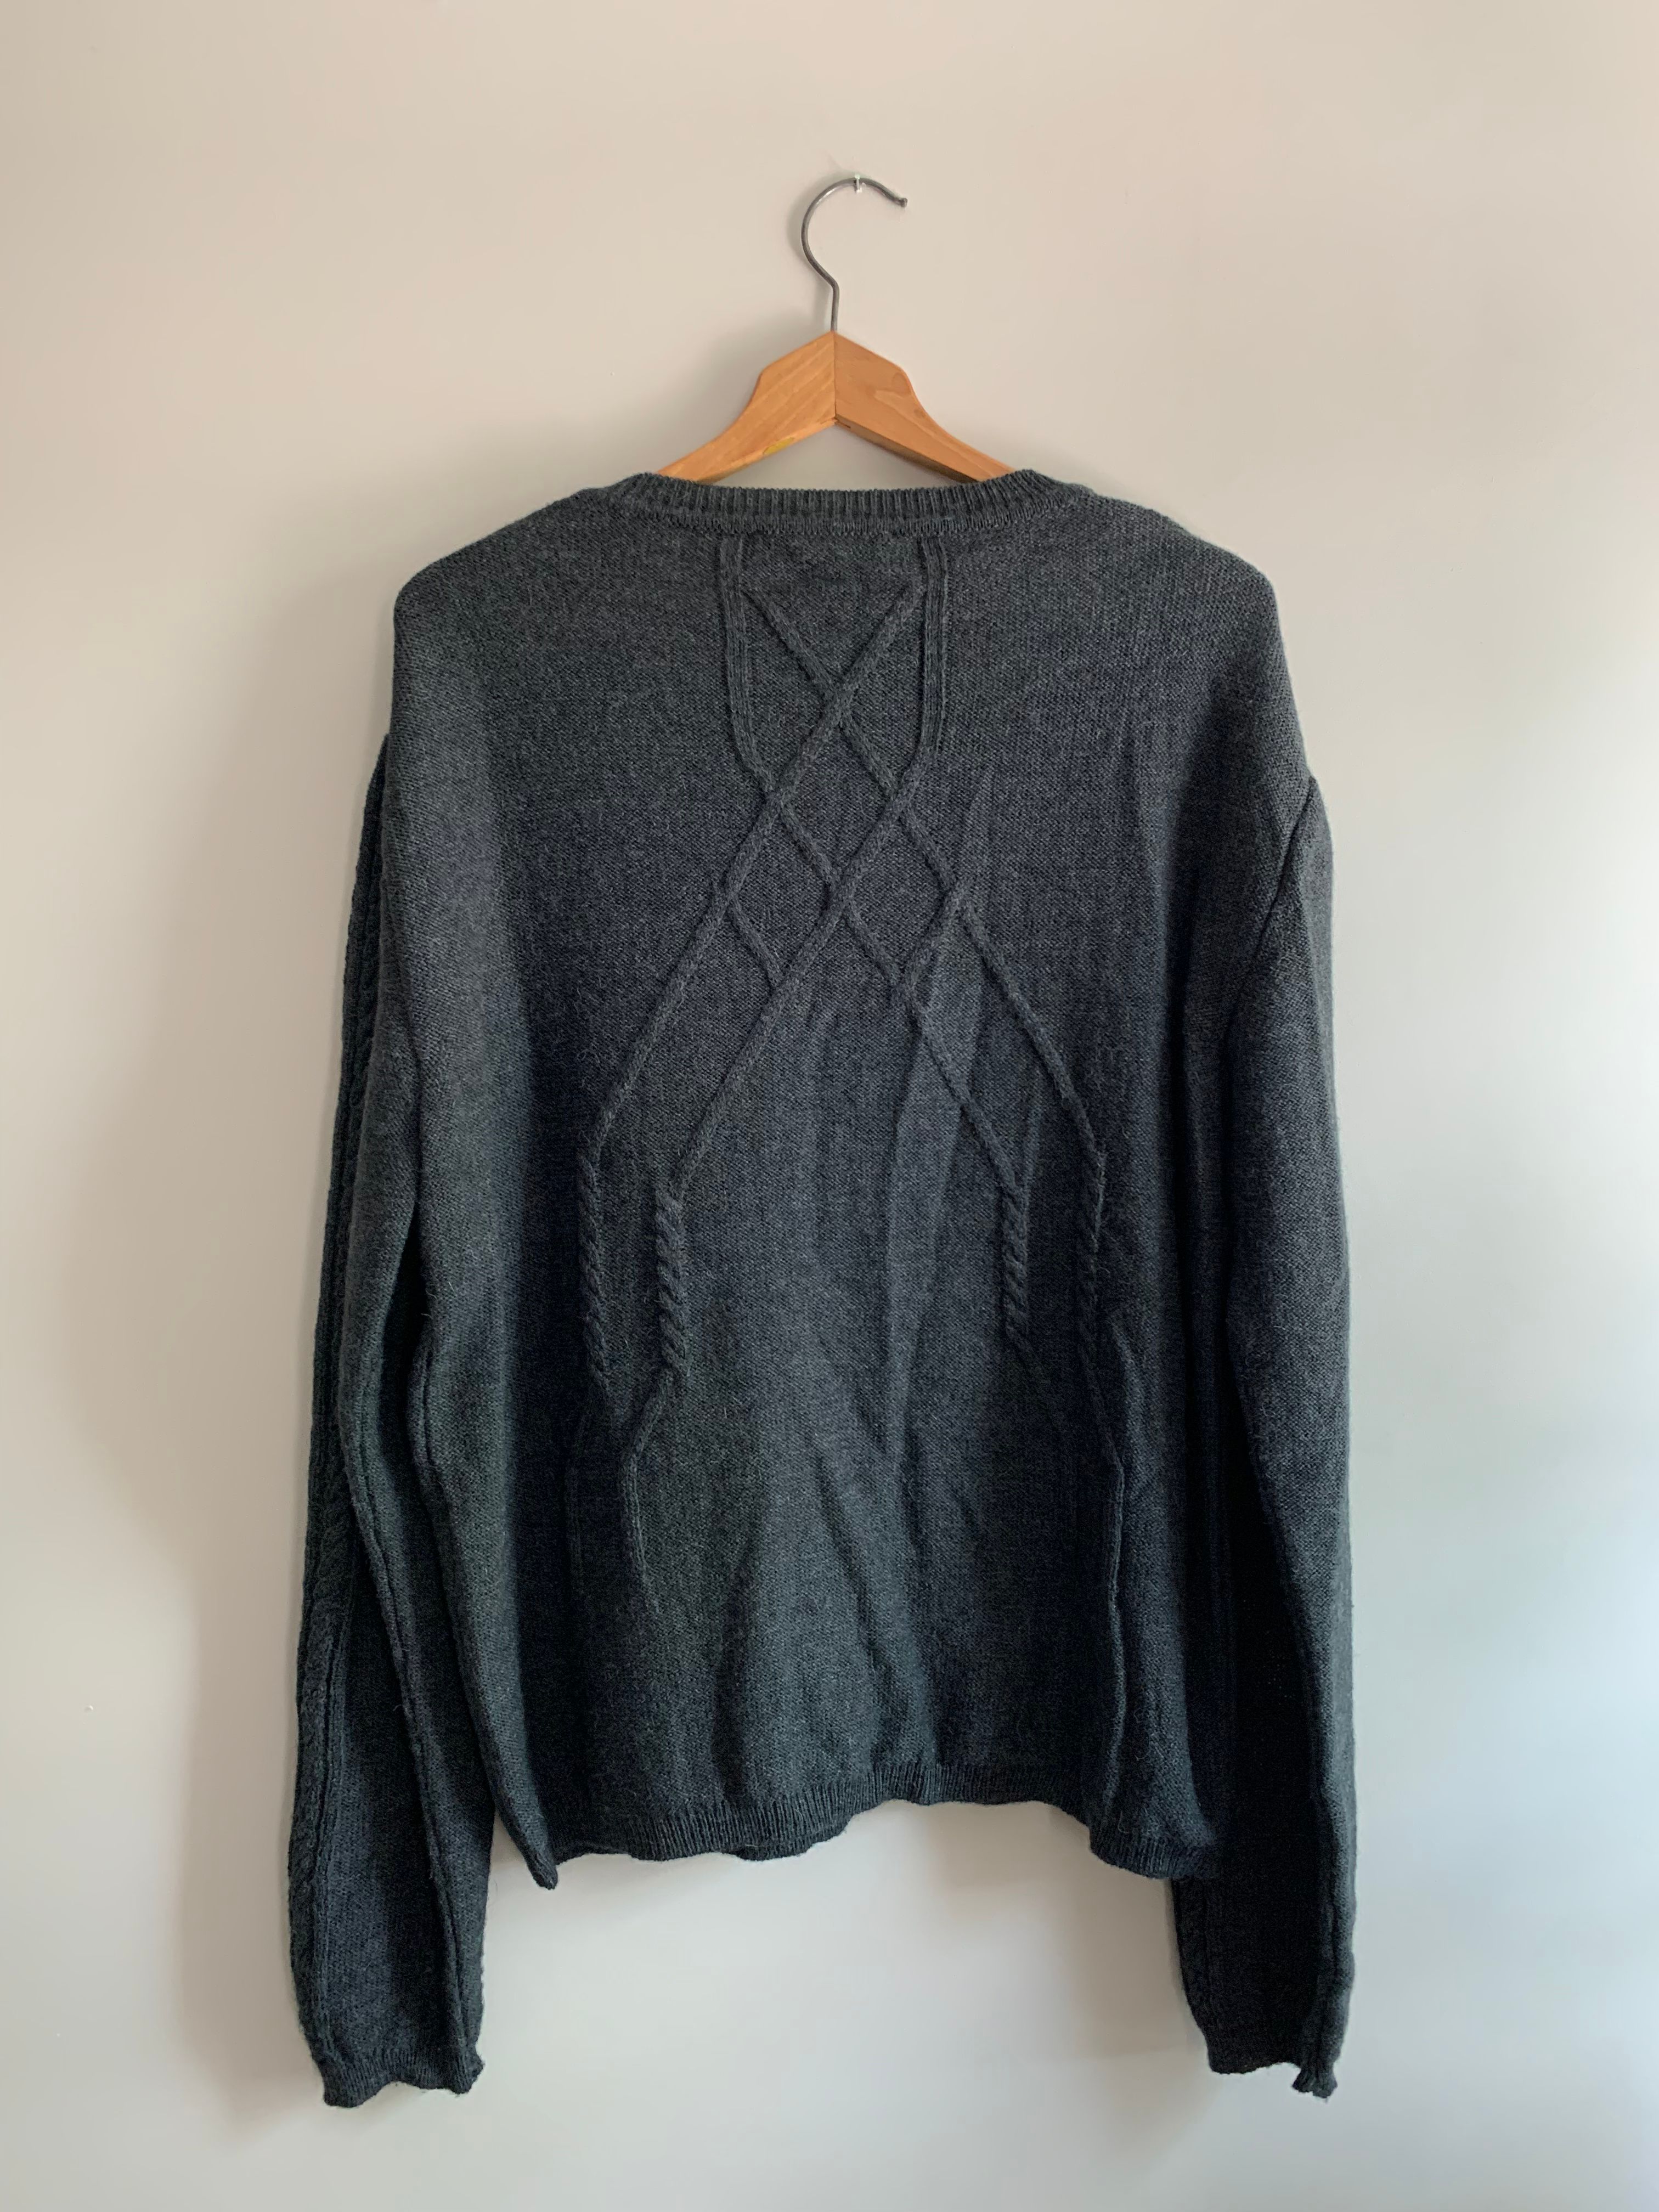 Kiko Kostadinov SS22 Itten cable knit sweater | Grailed